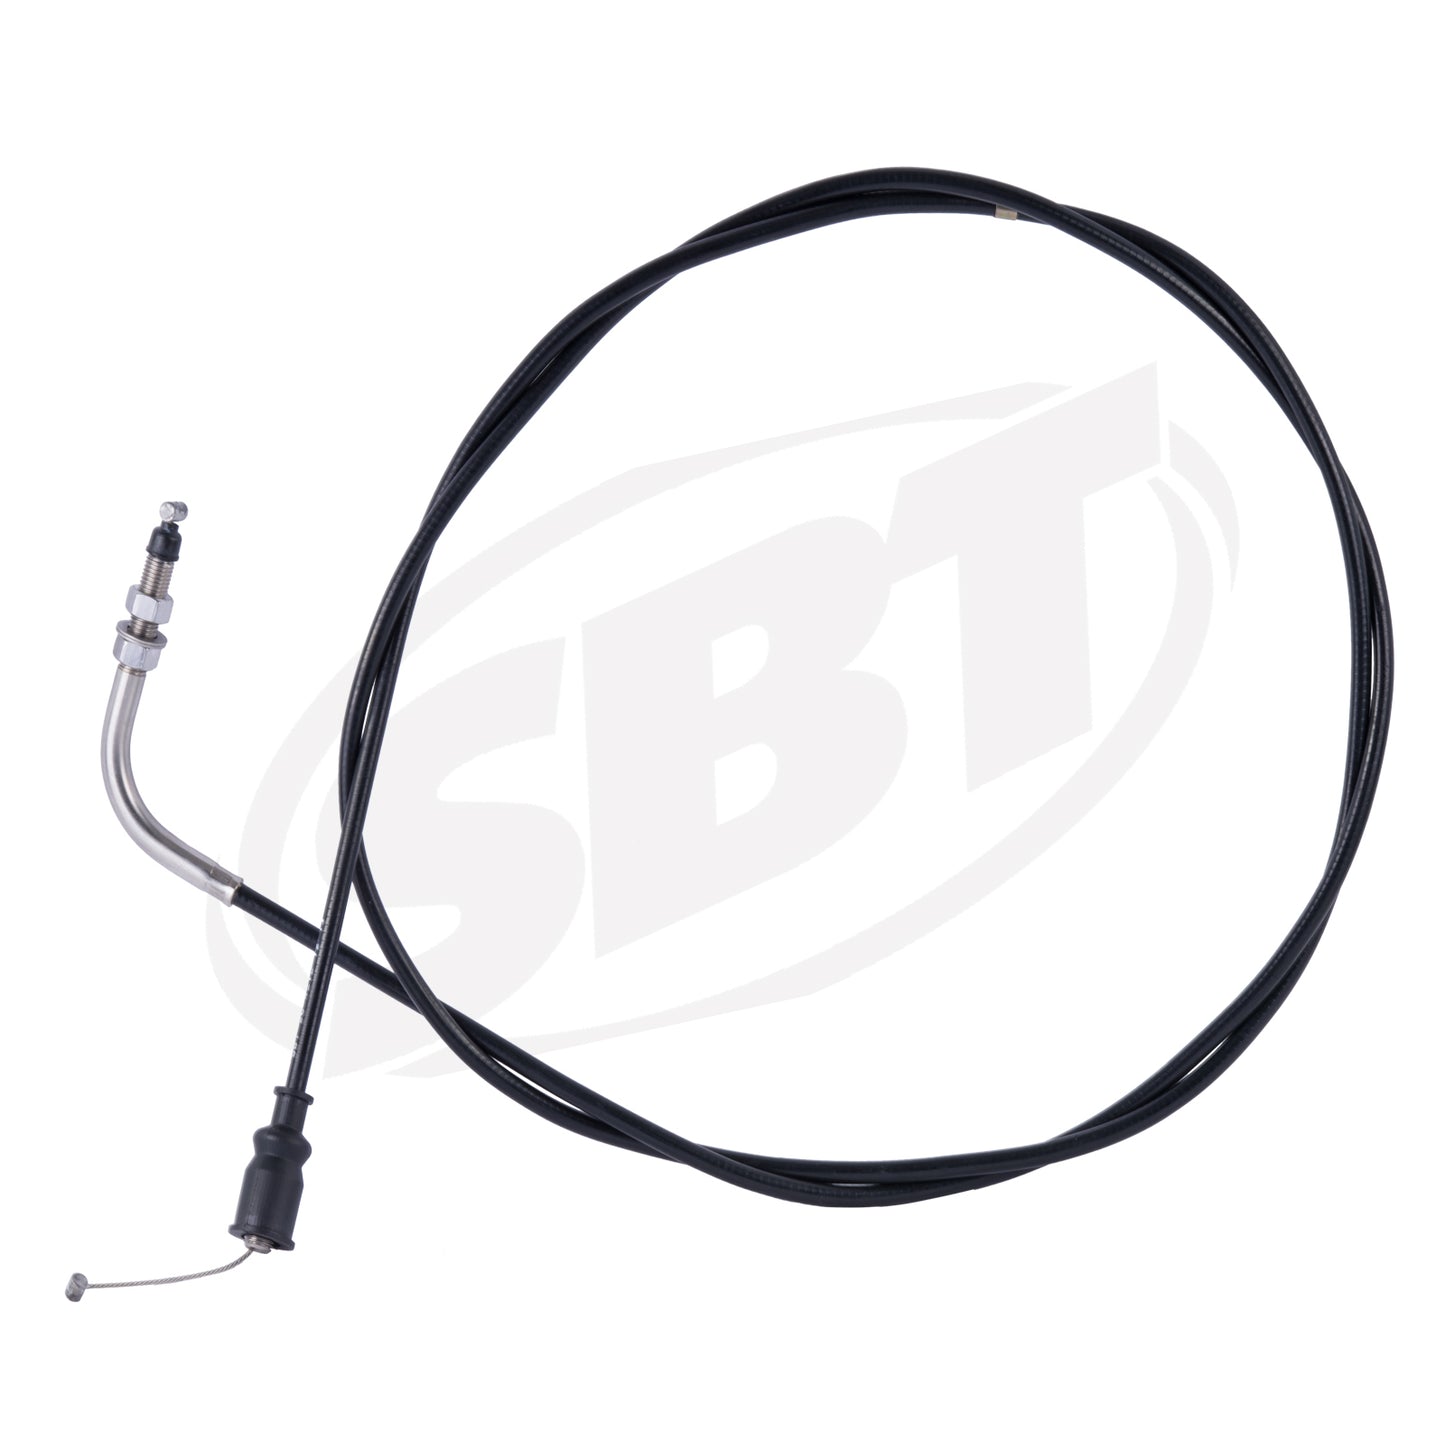 SBT Kawasaki Throttle Cable 550 SX 54012-3725 1991 1992 1993 1994 1995